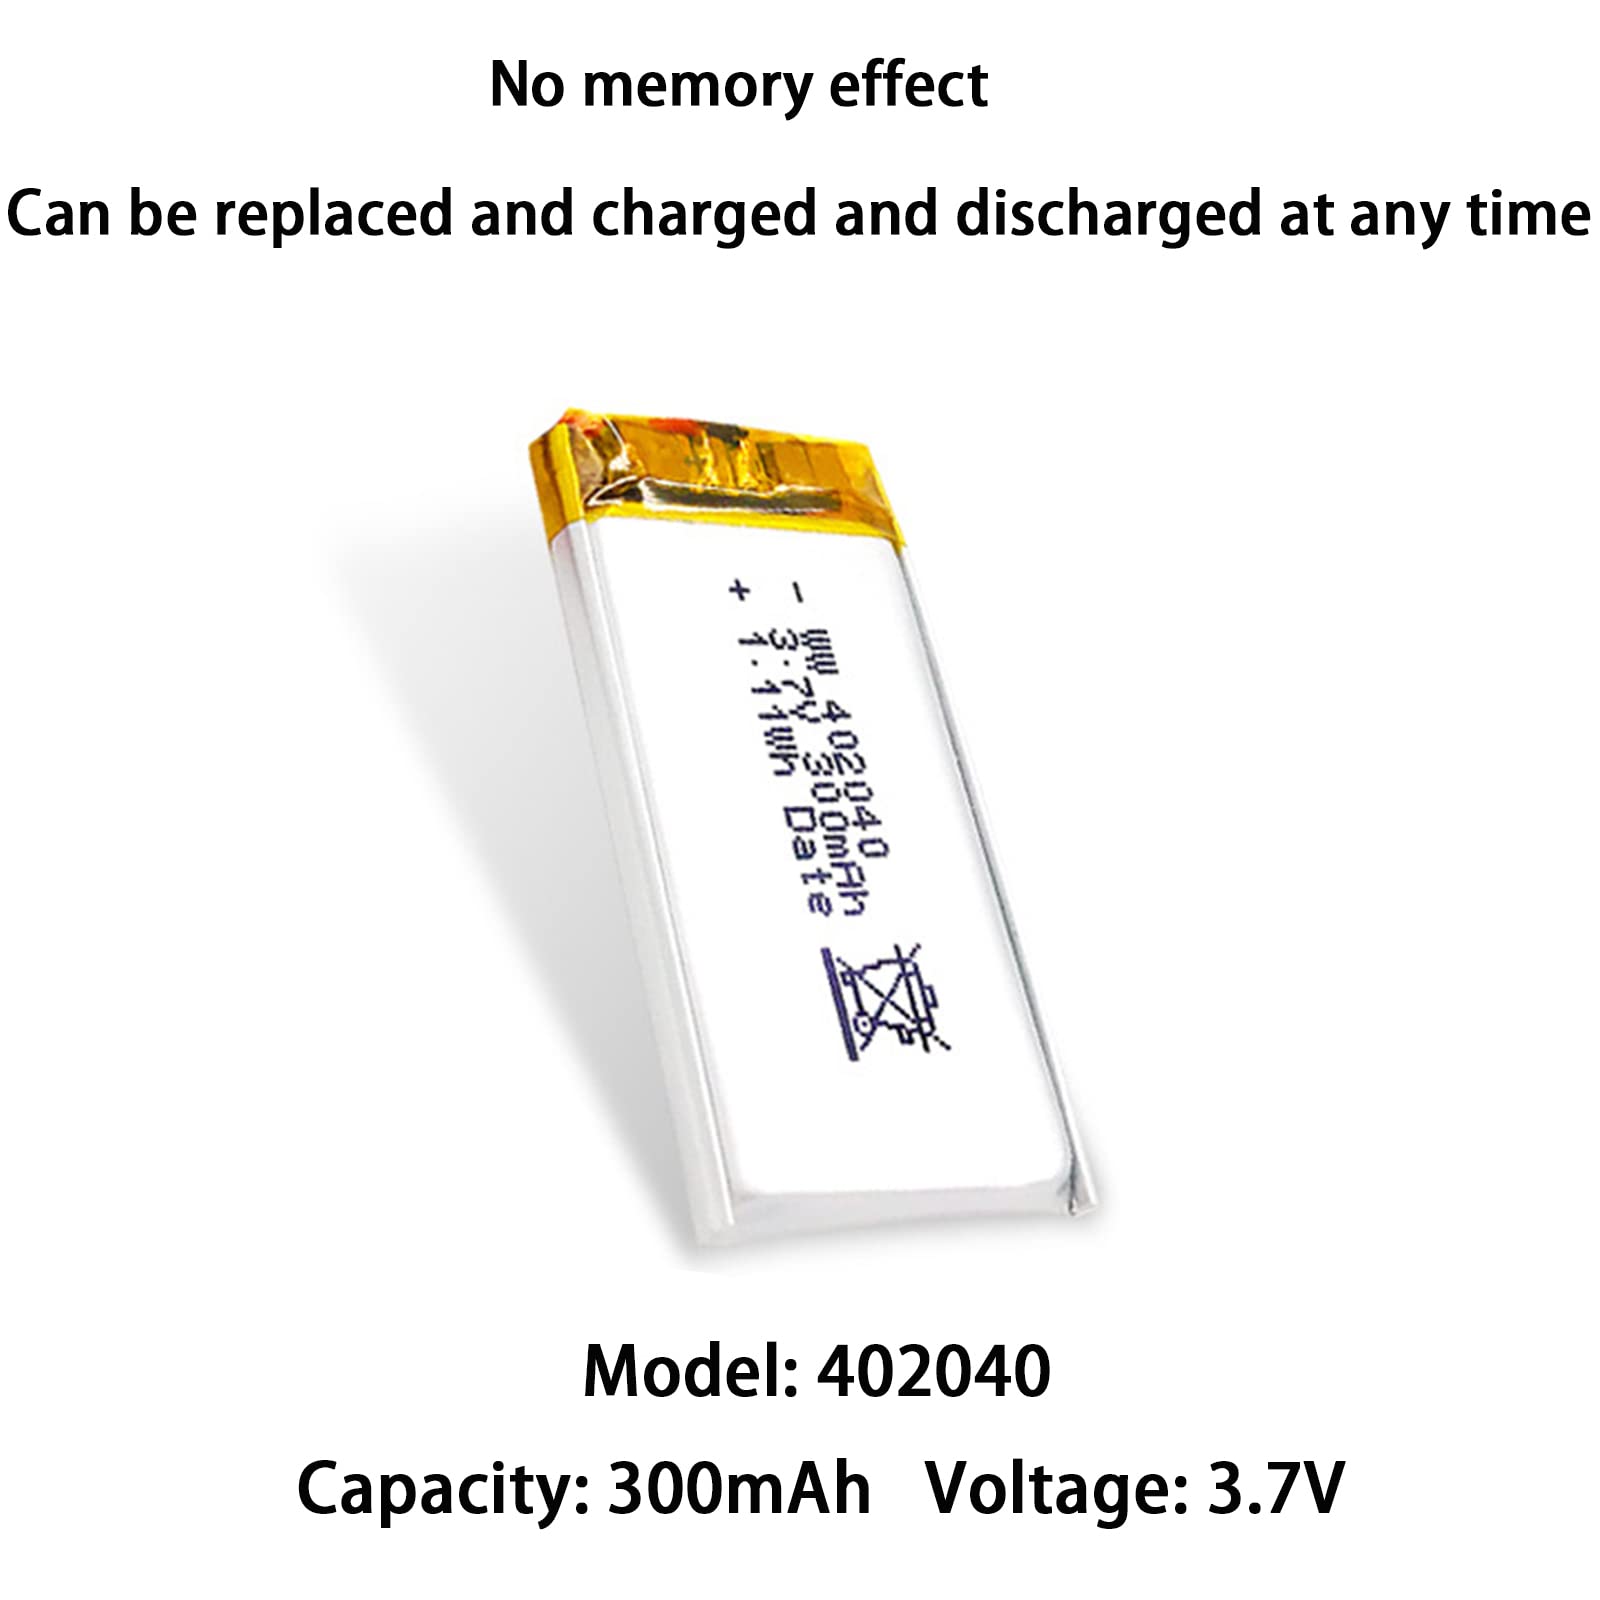 Jieoto 3.7V Household Li-Battery 300mAh 402040 Lithium Polymer ion Battery Rechargeable Lithium-ion Polymer Battery Pack with Protection Board(2 pcs)